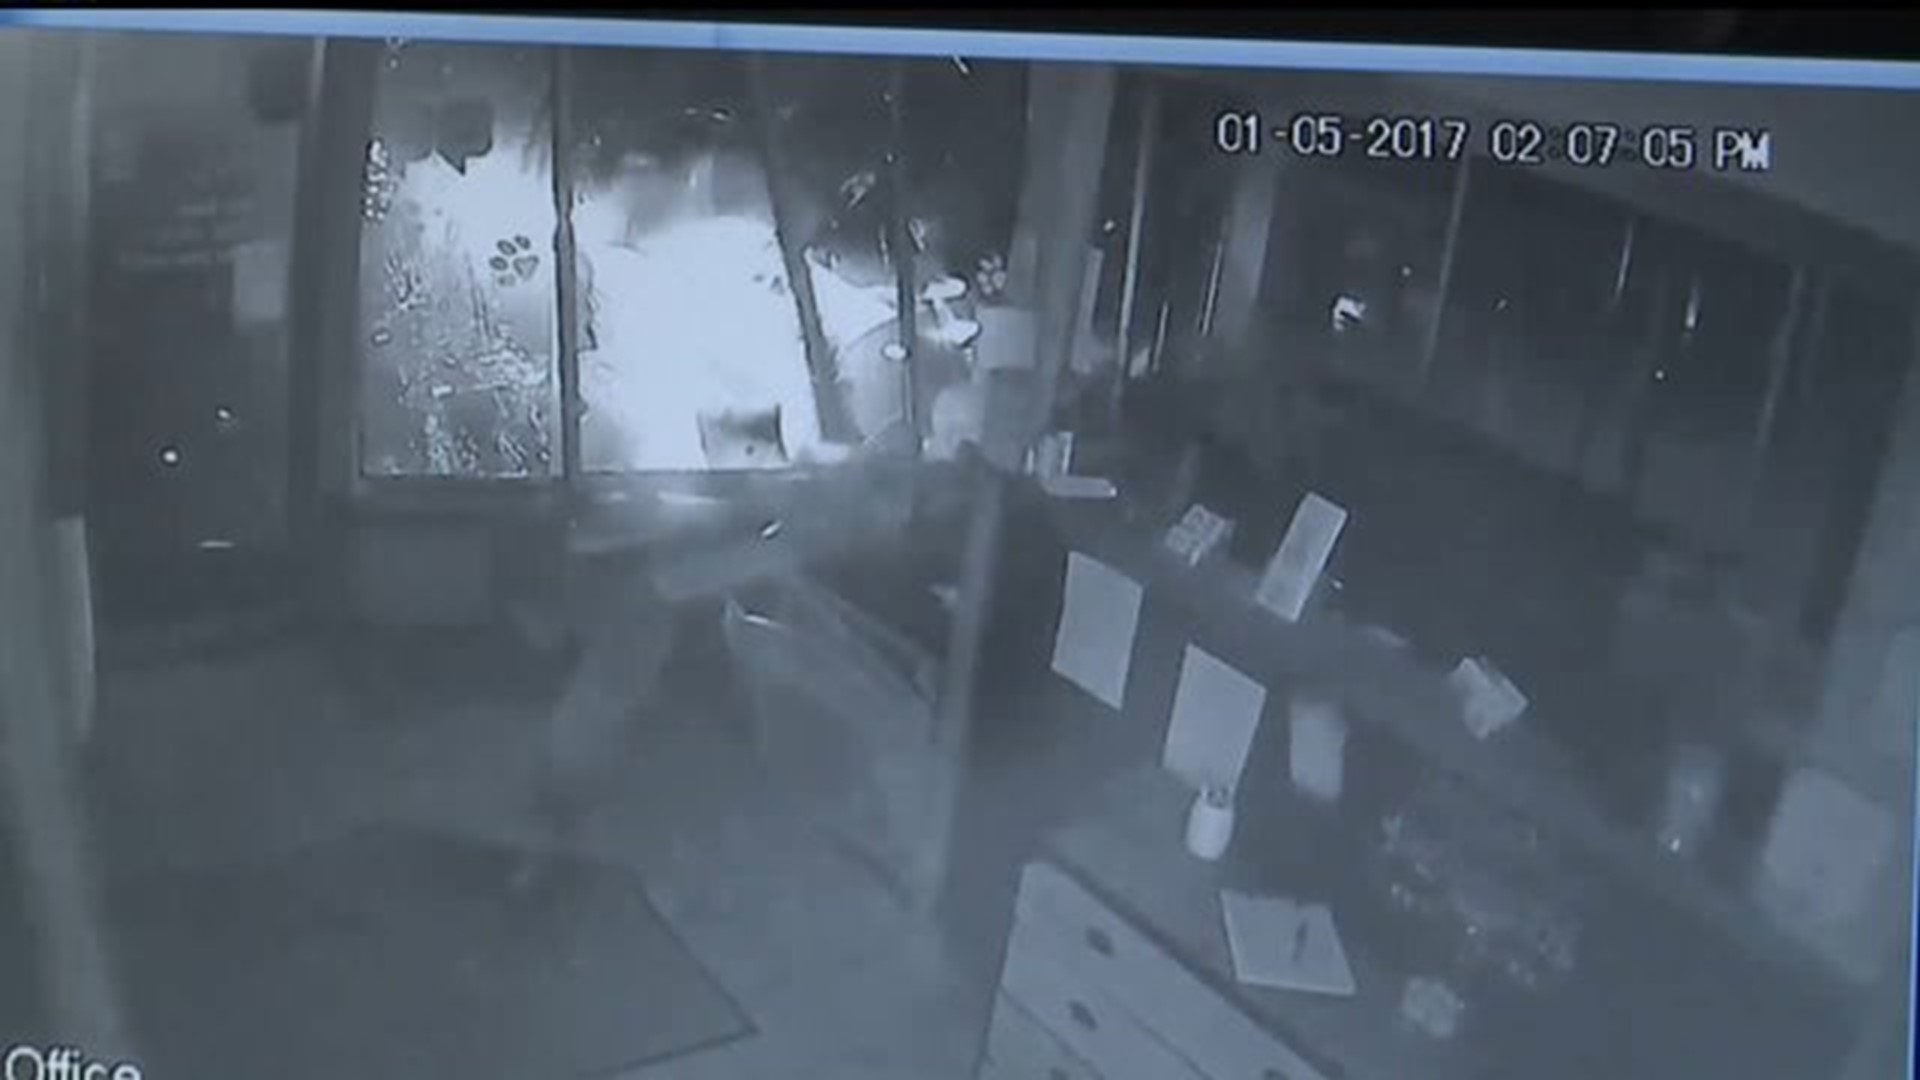 Surveillance Video of Car Crashing Into Building